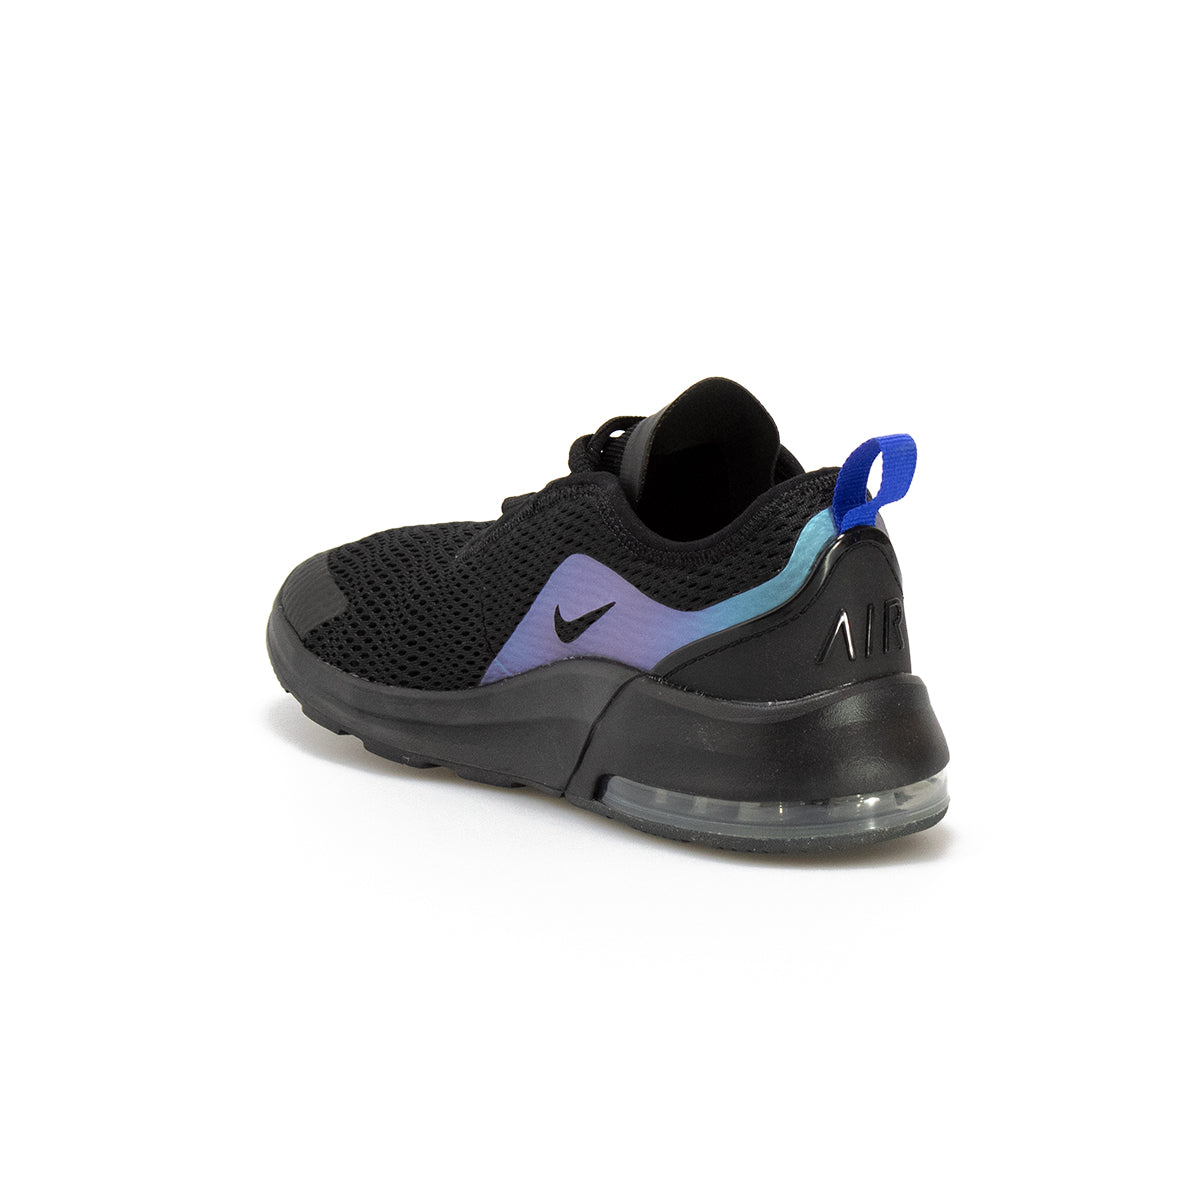 Sneakers Nike Air Max Motion 2 Nera Blu Cangiante